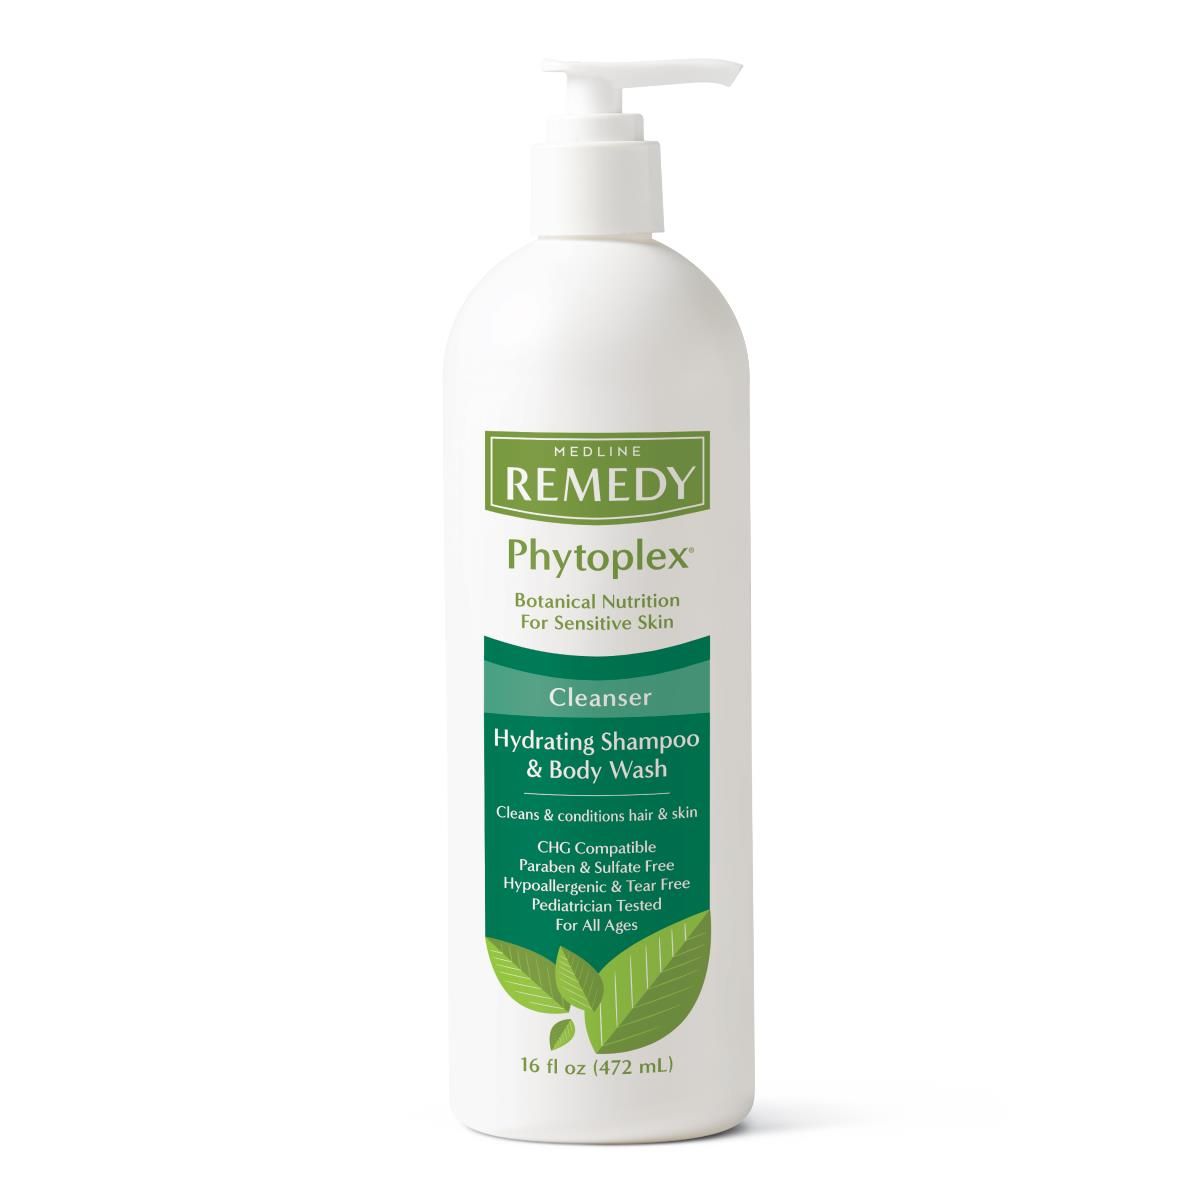 DISCMedline Remedy with Phytoplex Hydrating Cleansing Gel and Shampoo - 16 fl oz